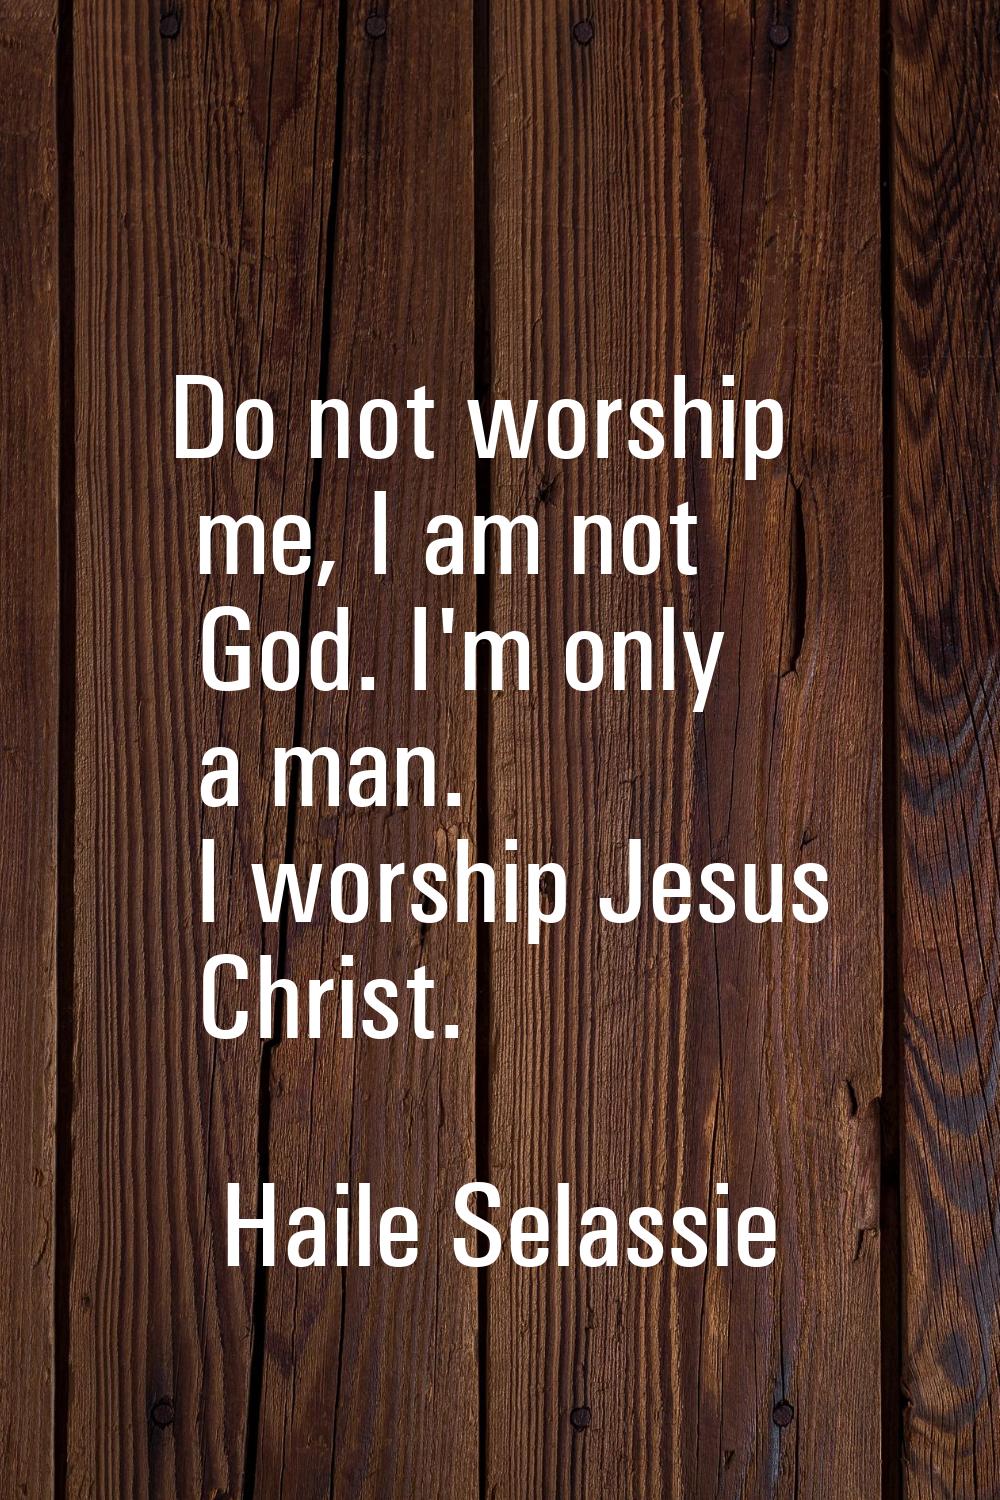 Do not worship me, I am not God. I'm only a man. I worship Jesus Christ.